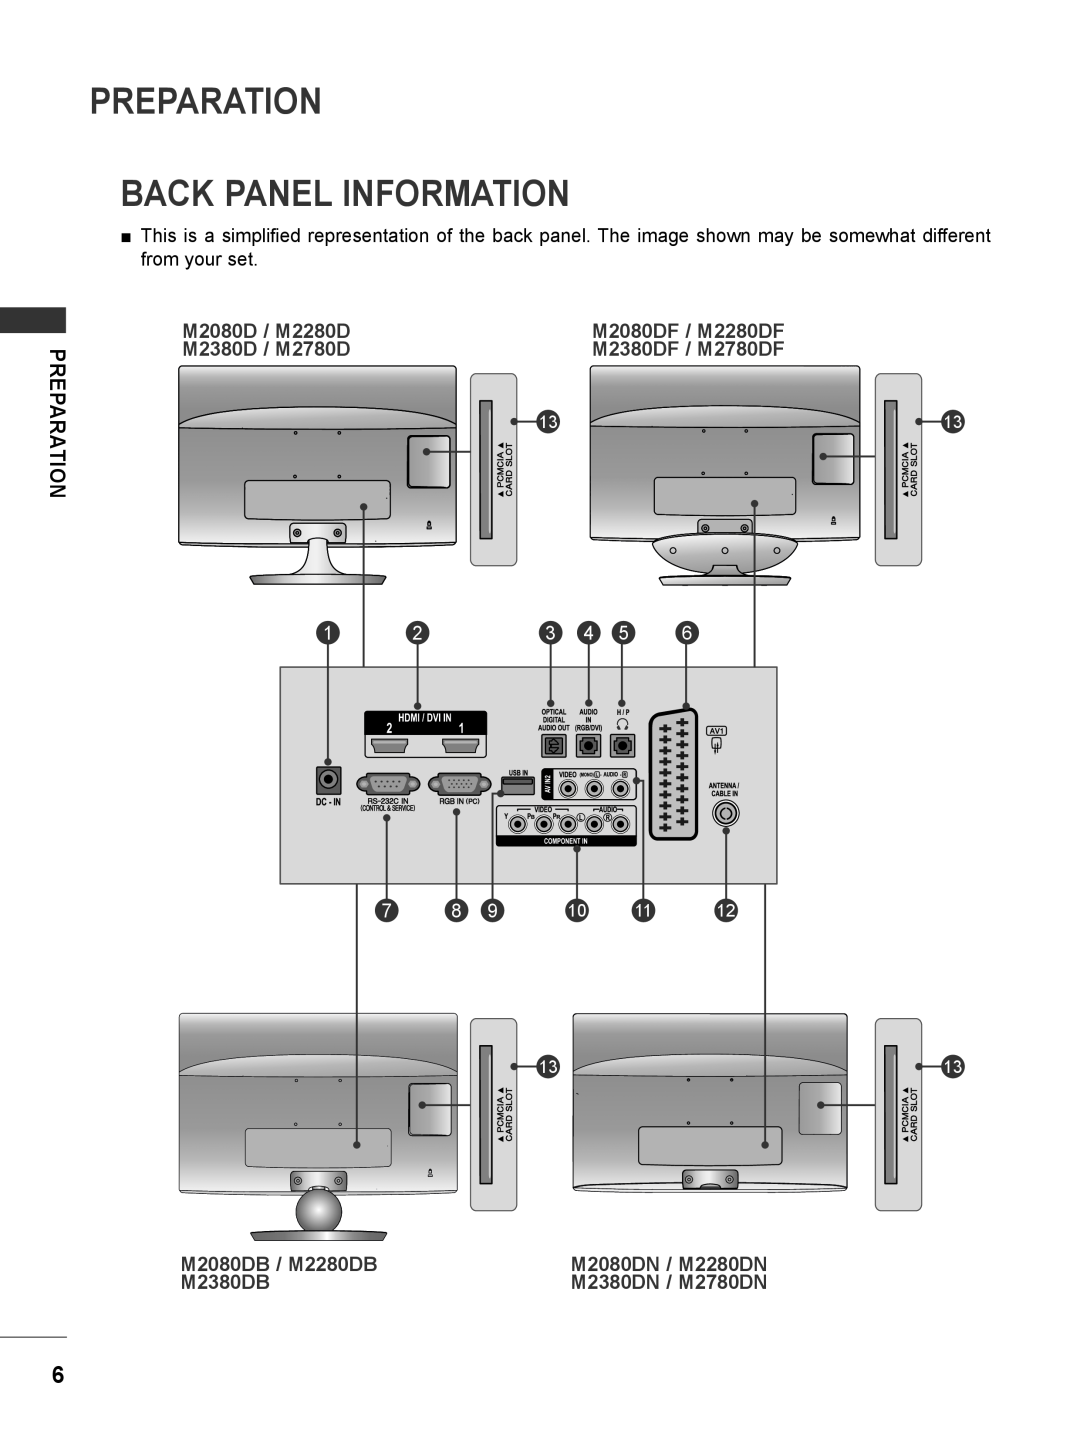 LG Electronics M2280DN Preparation Back Panel Information, M2080D / M2280D M2380D / M2780D, M2080DB / M2280DB, M2380DB 